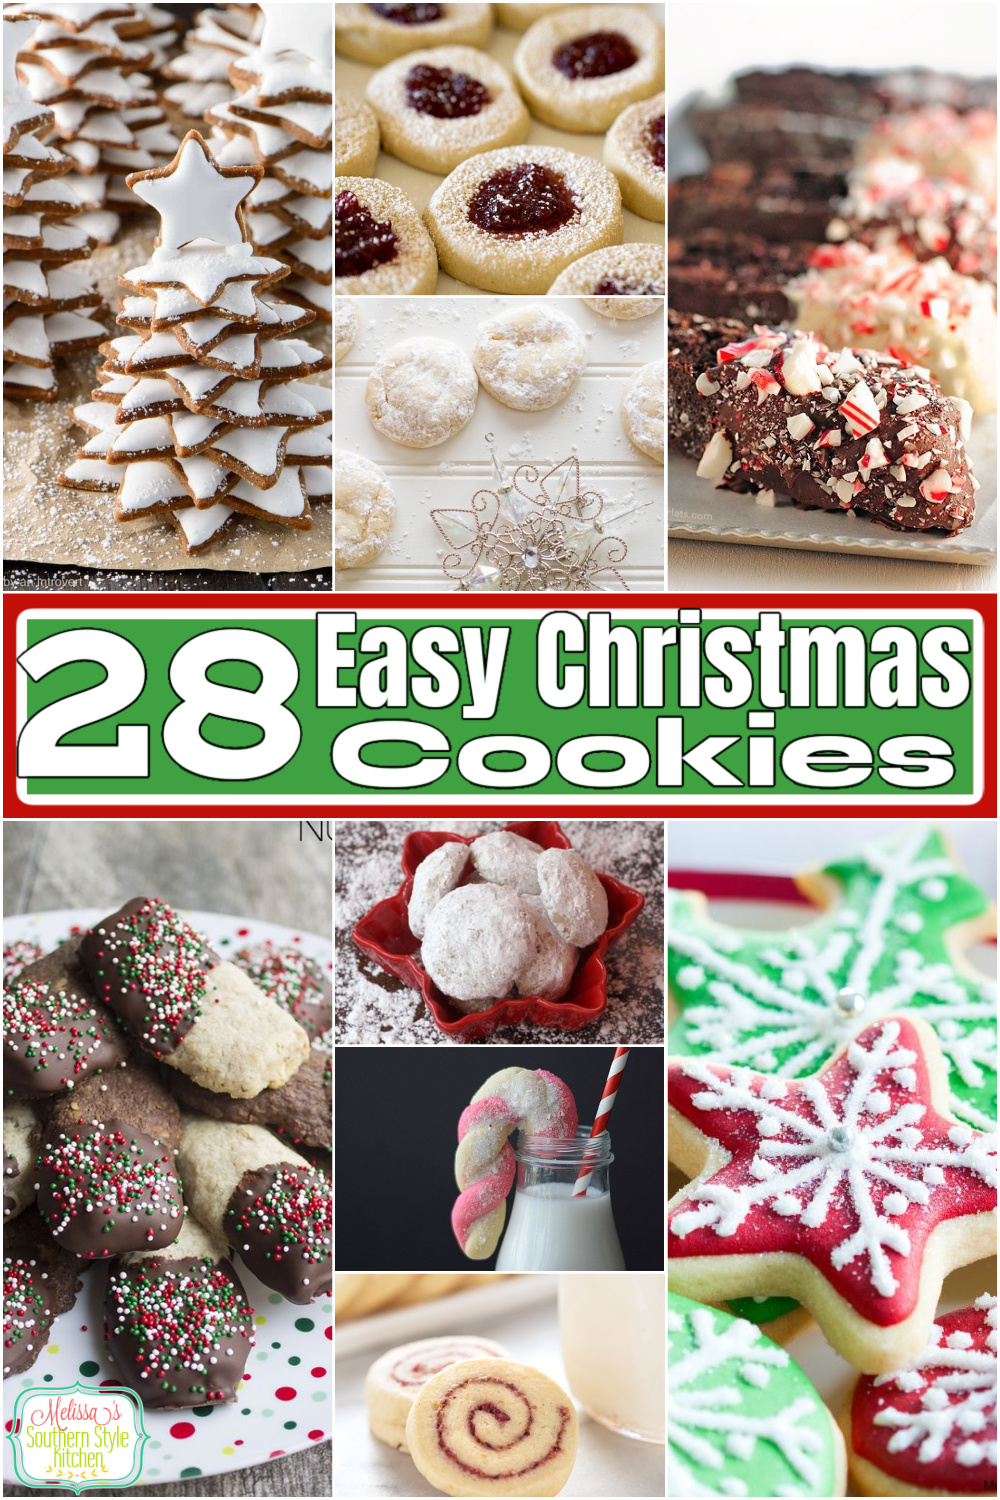 28-easy-christmas-cookies-pin via @melissasssk